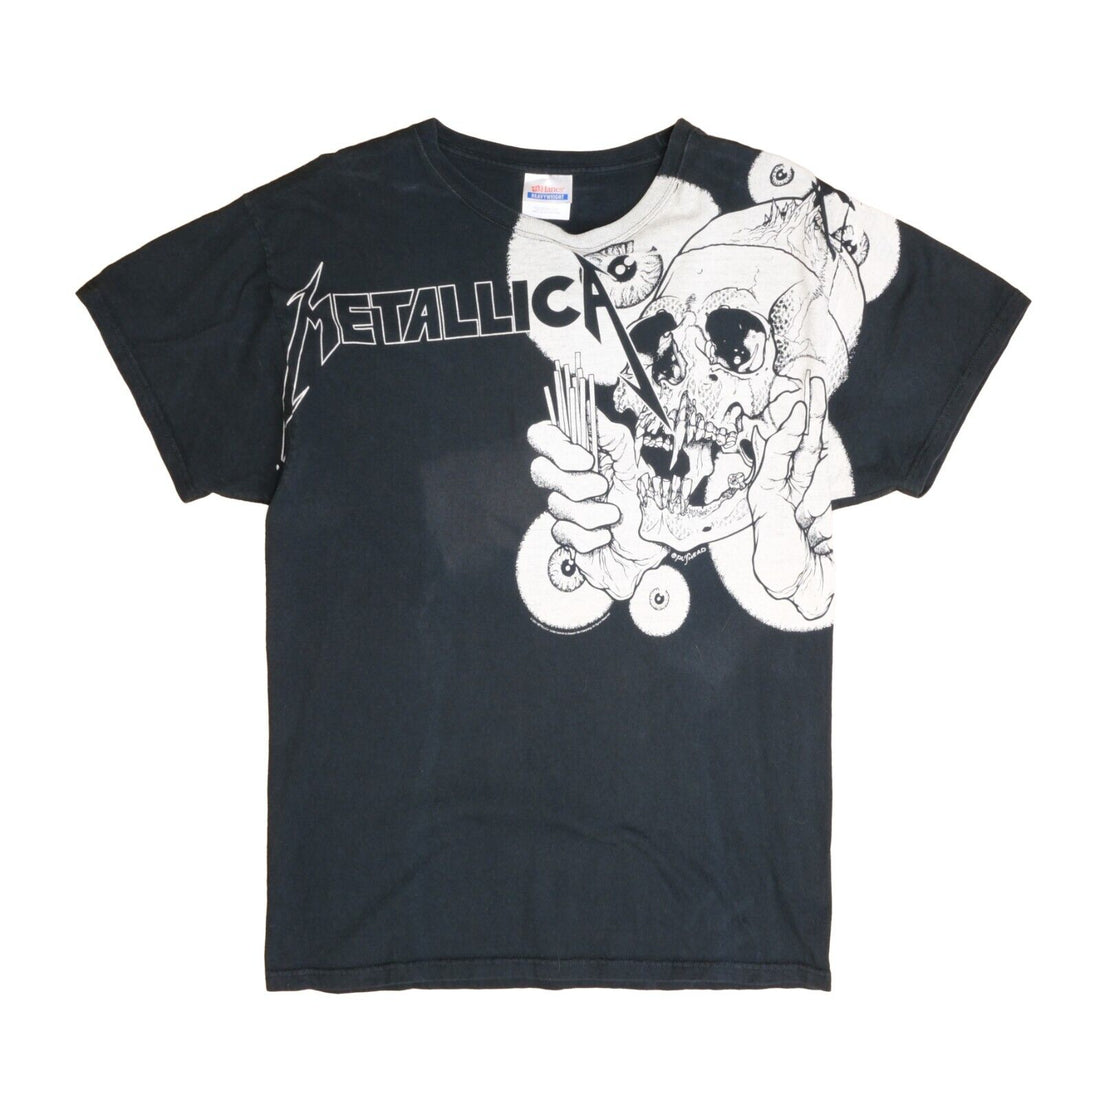 Metallica Skull T-Shirt Size XL Black Band Tee